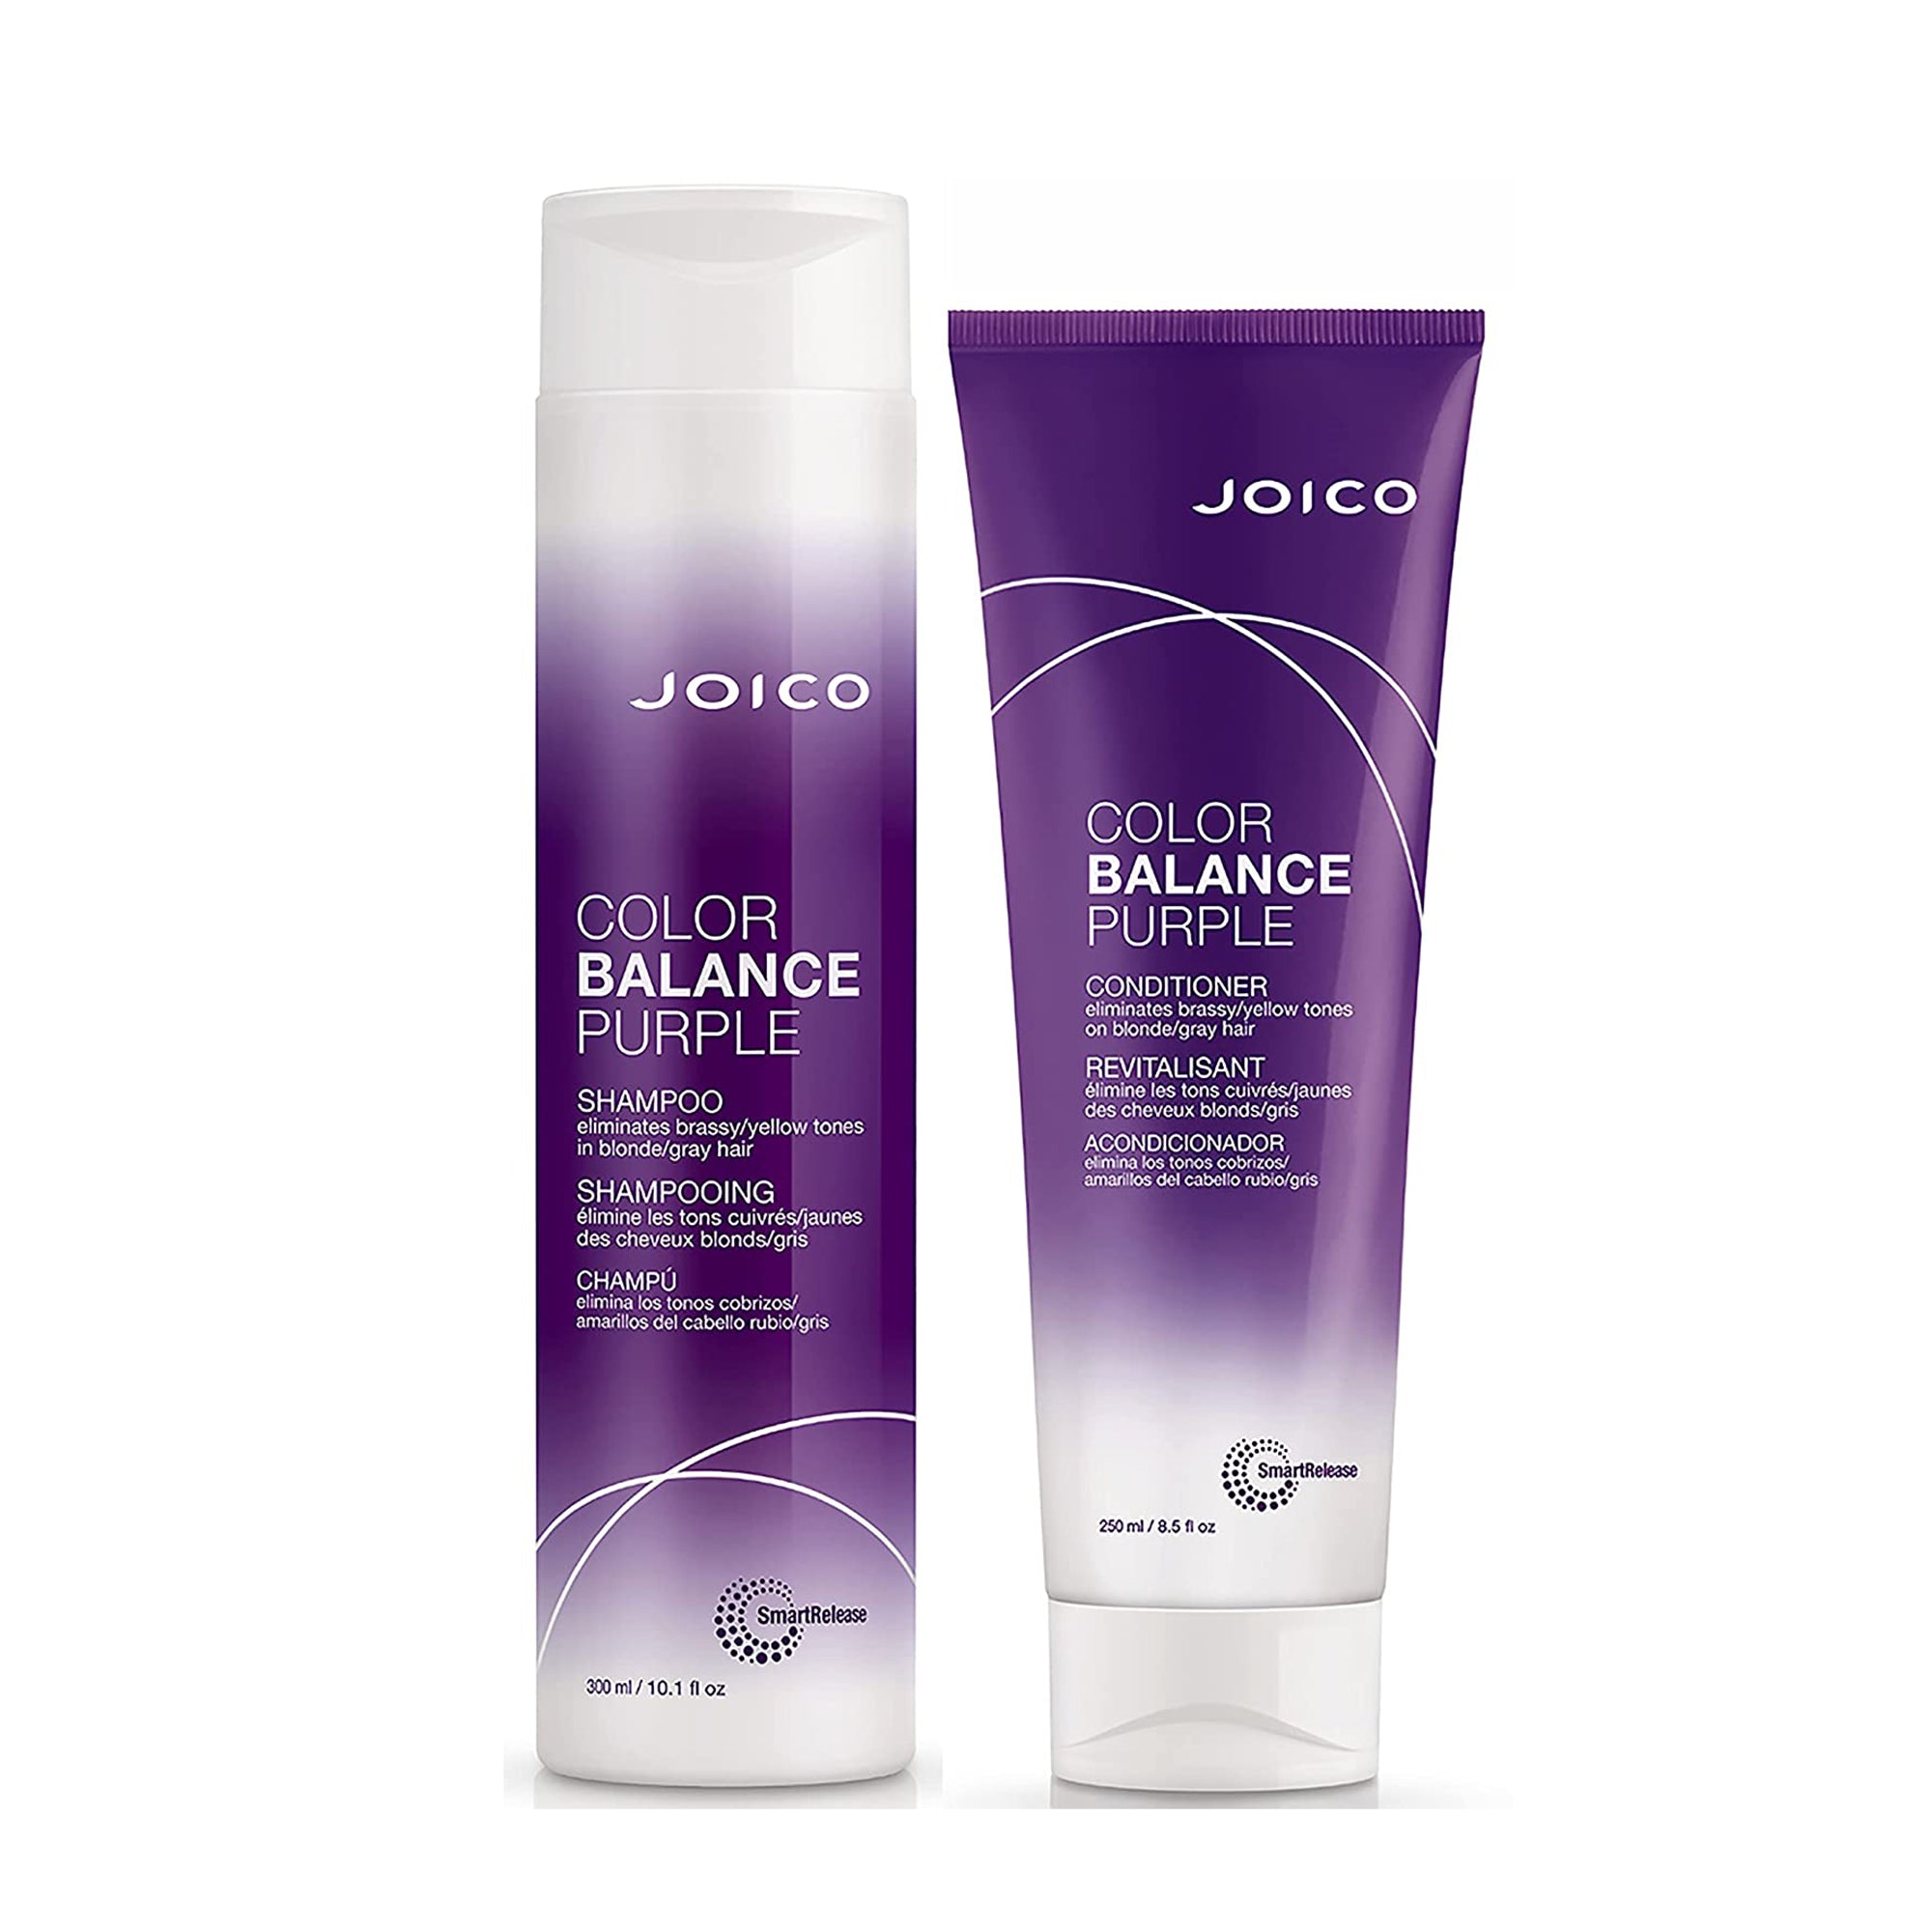 Joico Color Balancing Purple Shampoo and Conditioner 10oz DUO ($48 VALUE) / 10.OZ